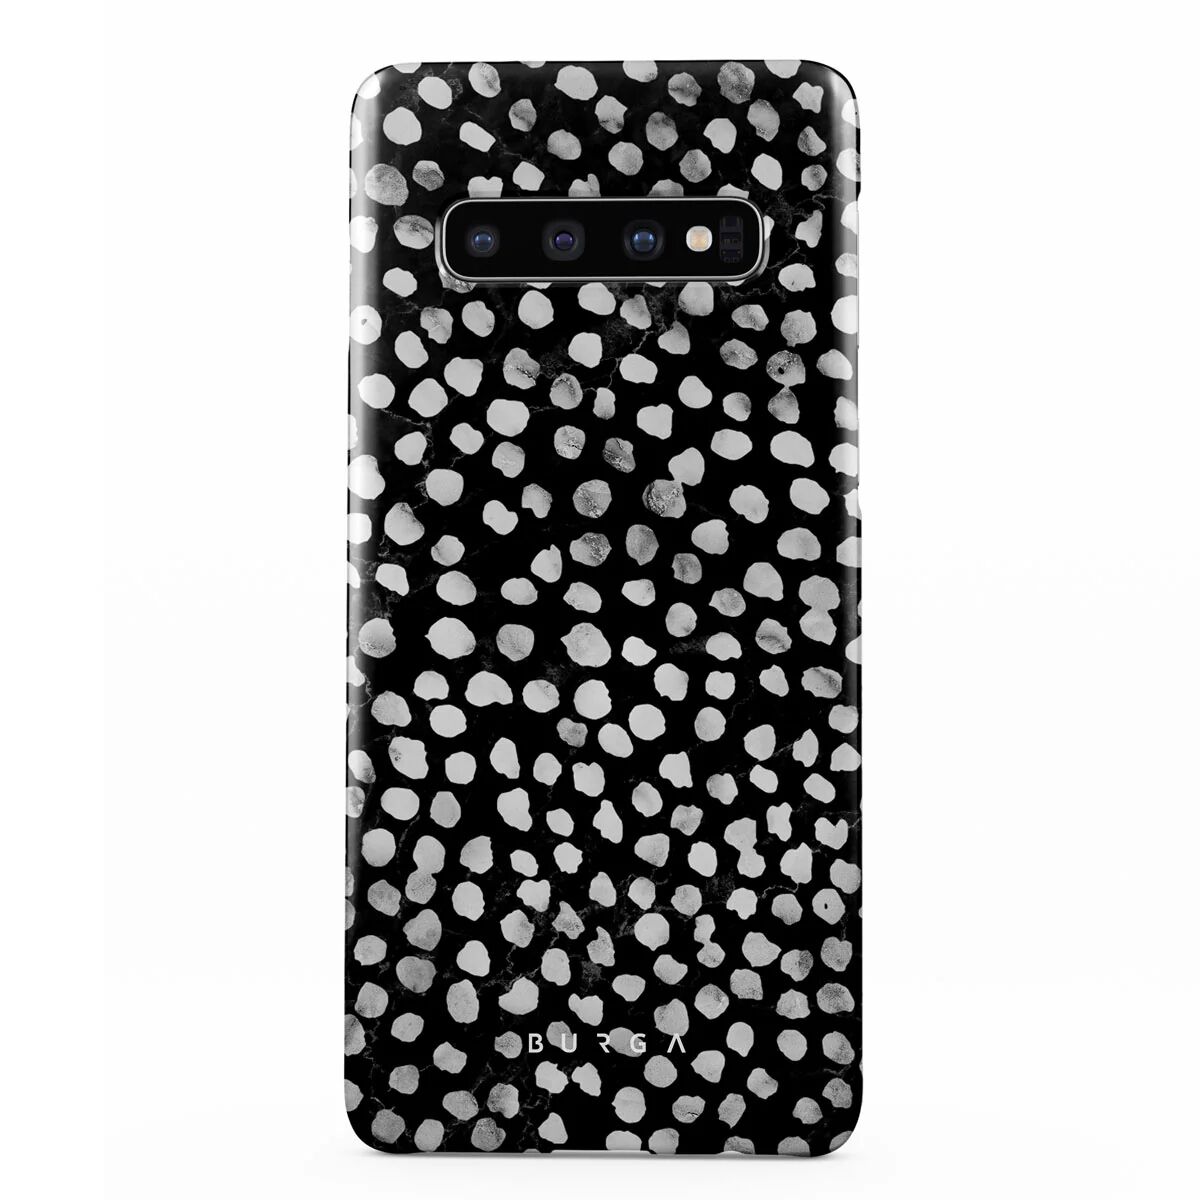 BURGA Night Sky- Dotted Samsung Galaxy S10 Plus Case